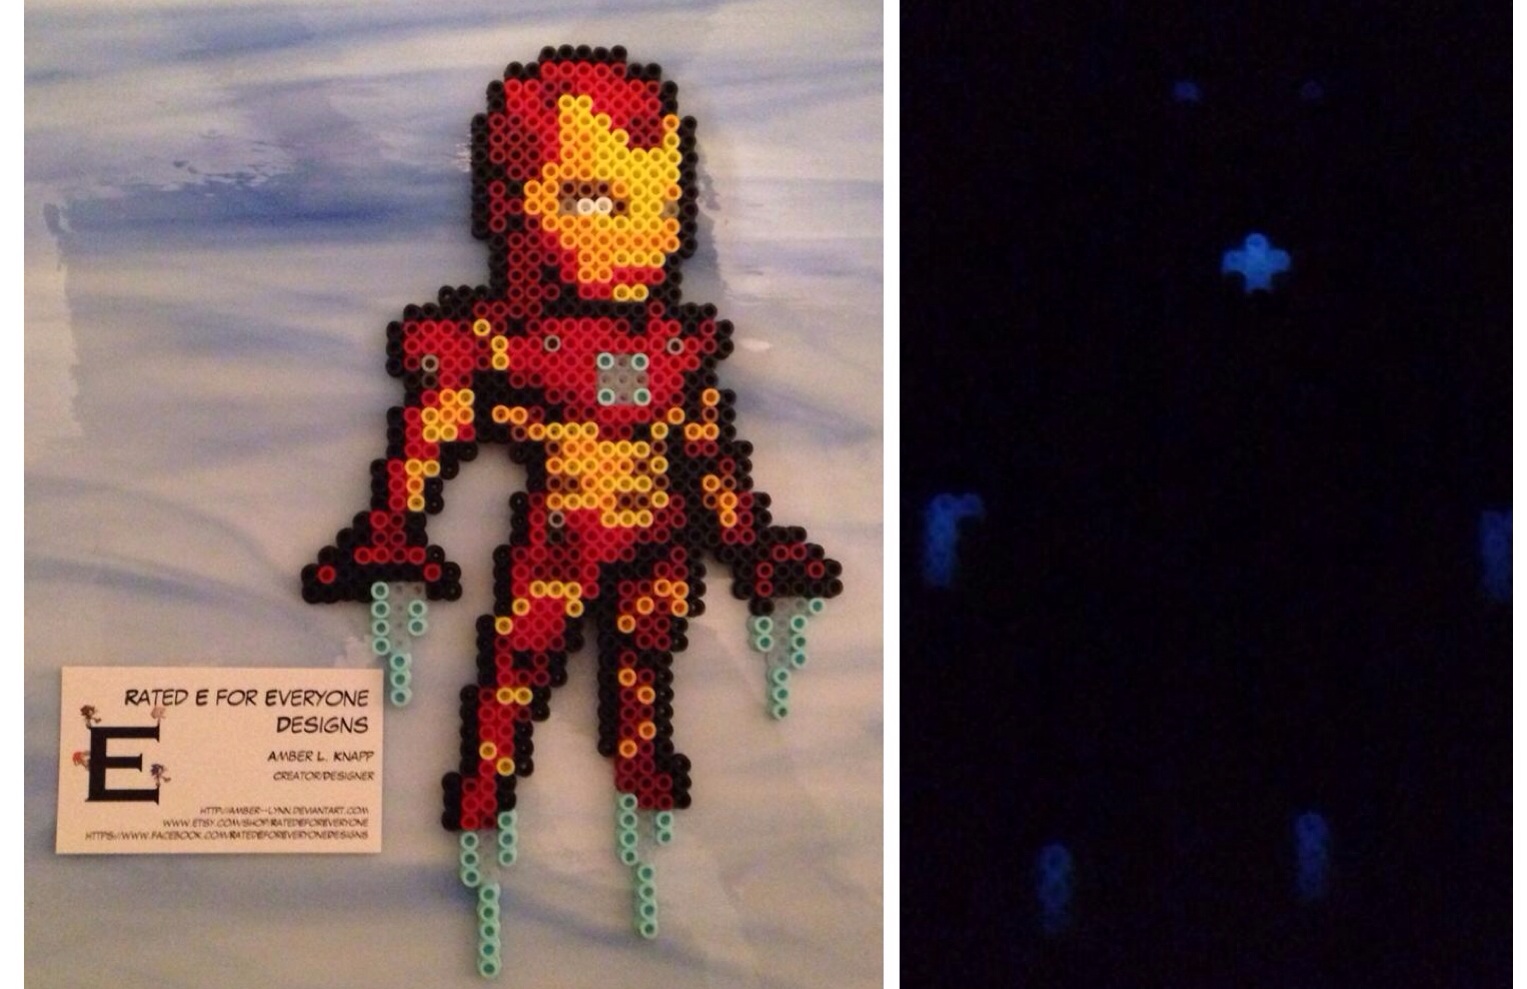 Iron Man Perler Bead Pattern, Bead Sprites